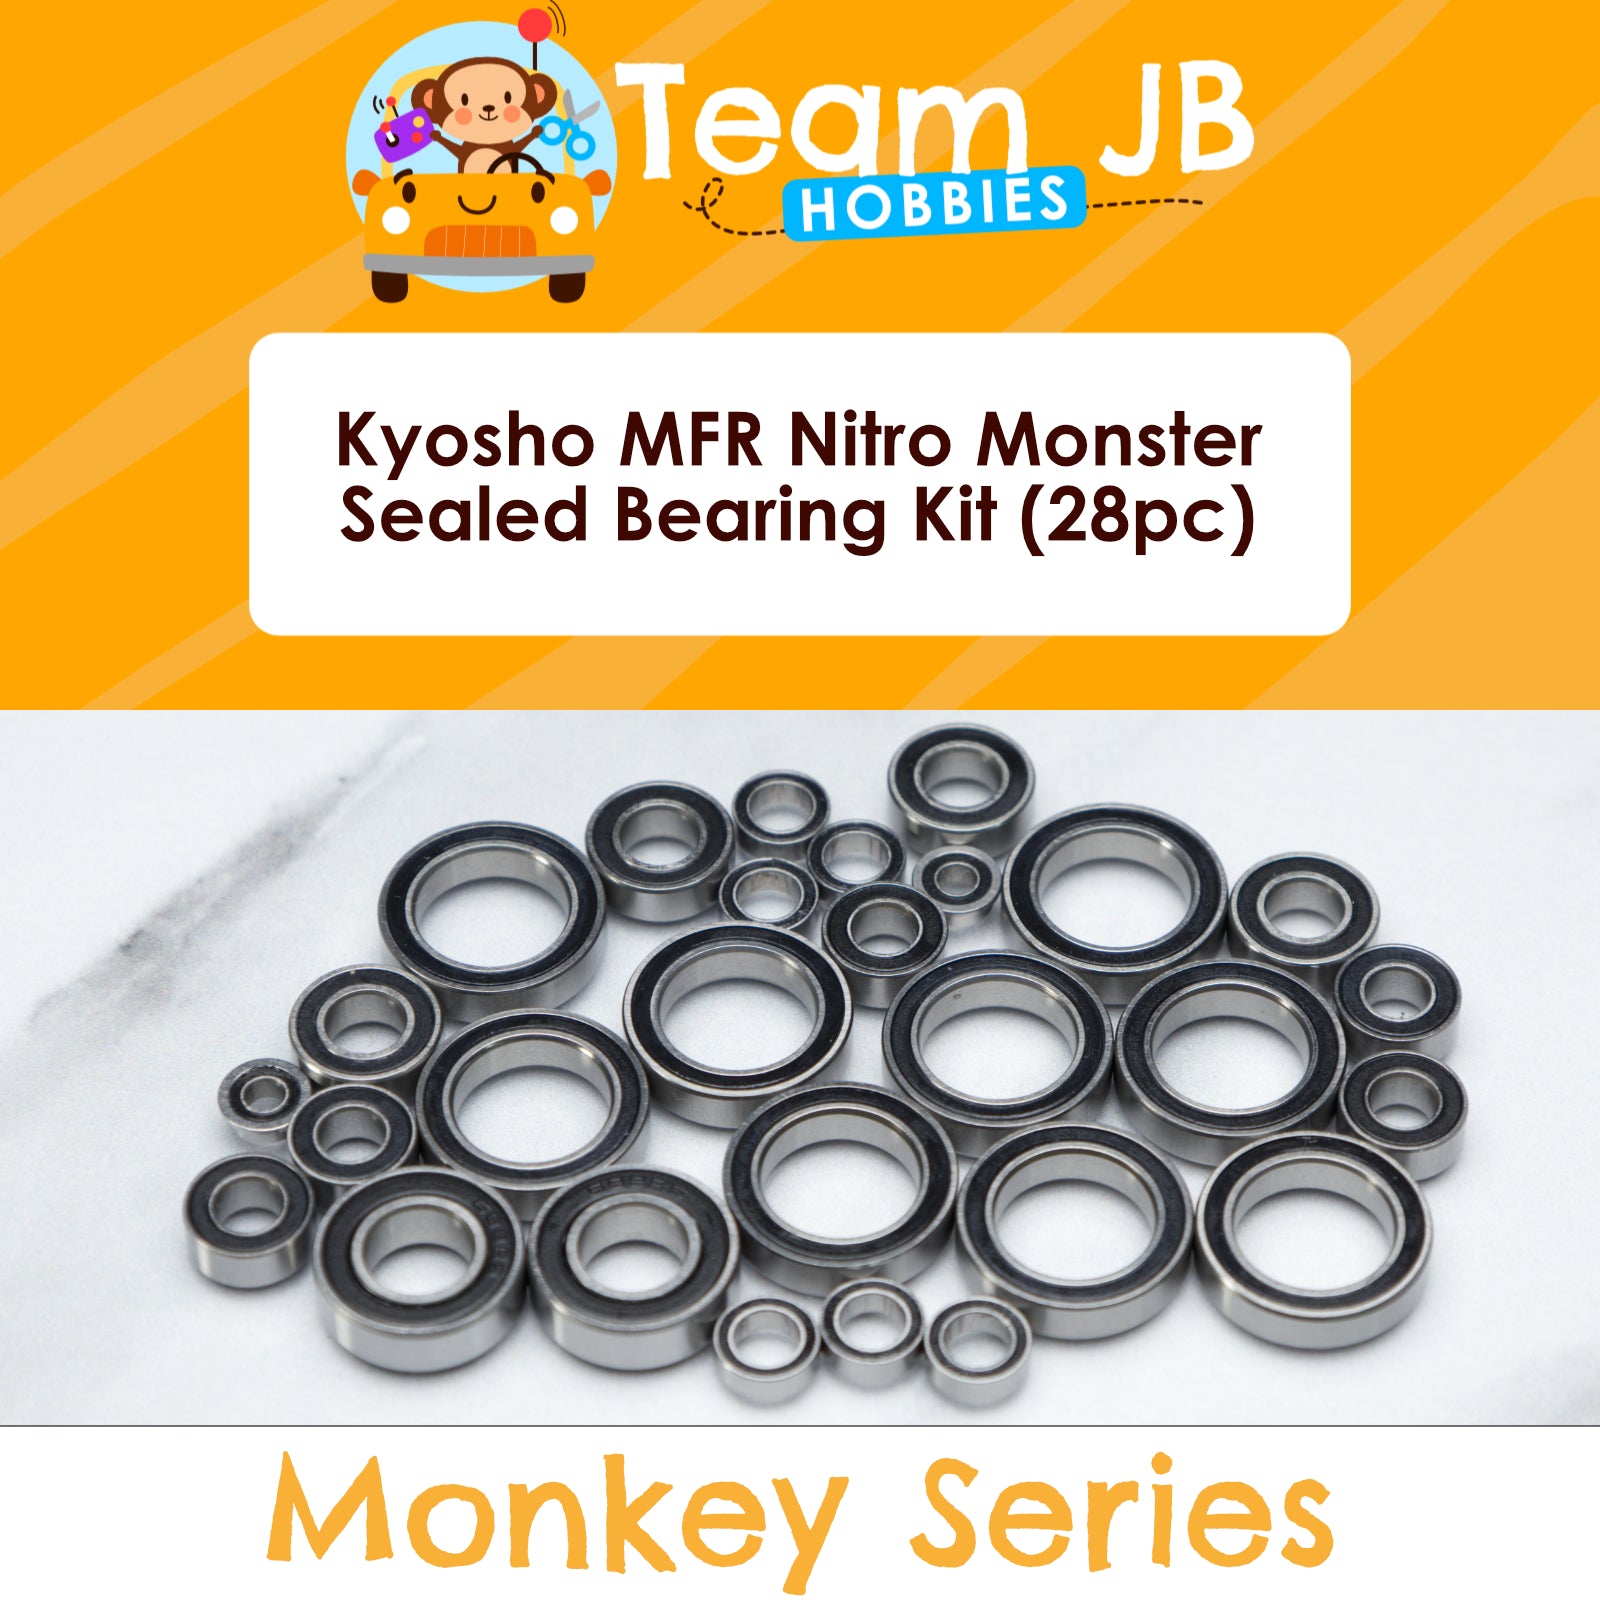 Kyosho MFR Nitro Monster - Sealed Bearing Kit